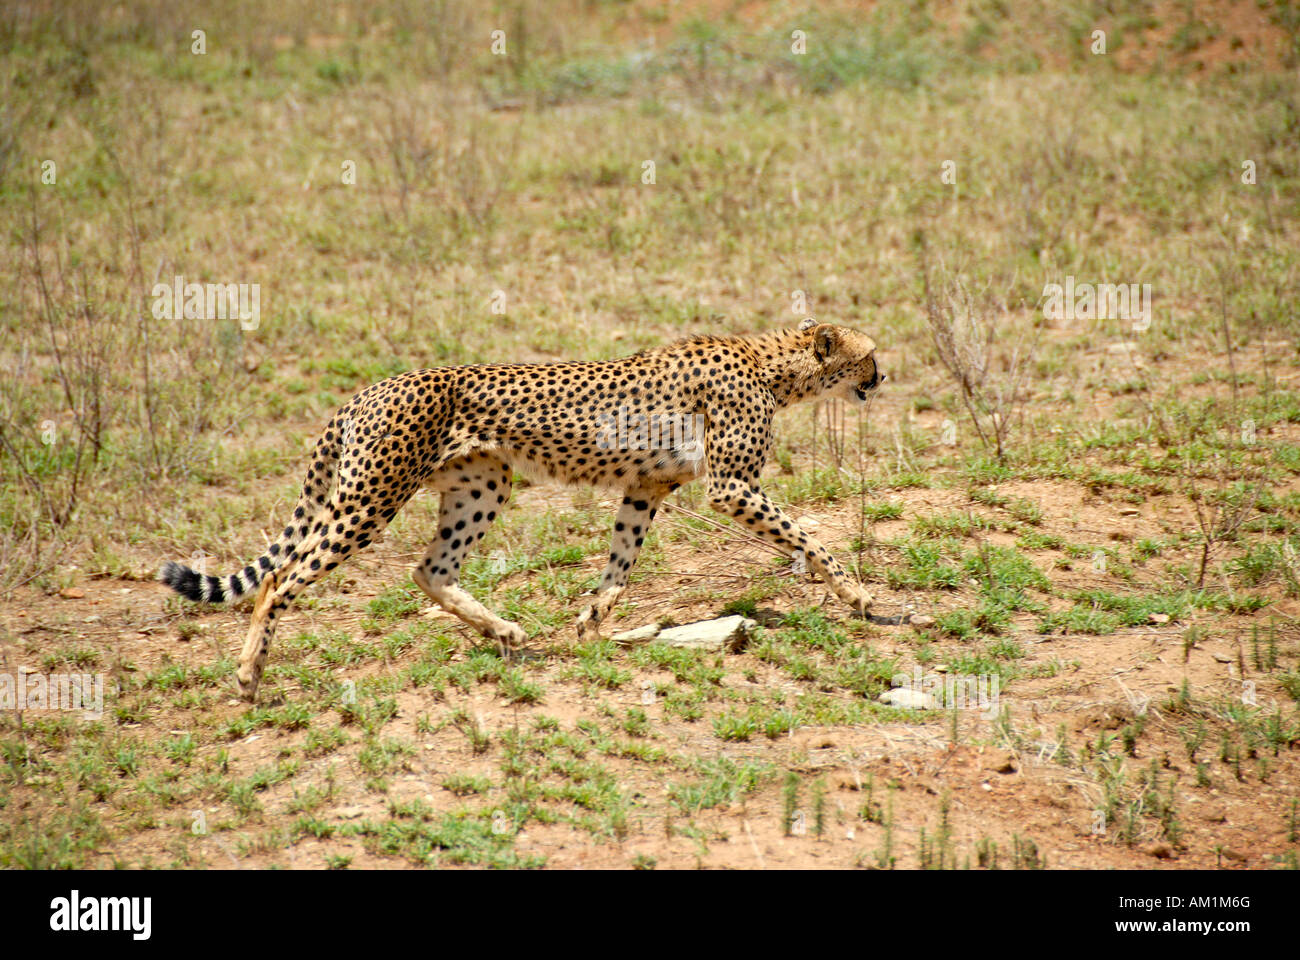 Cheetah (Acinonyx jubatus) at still hunt Serengeti National Park Tanzania Stock Photo